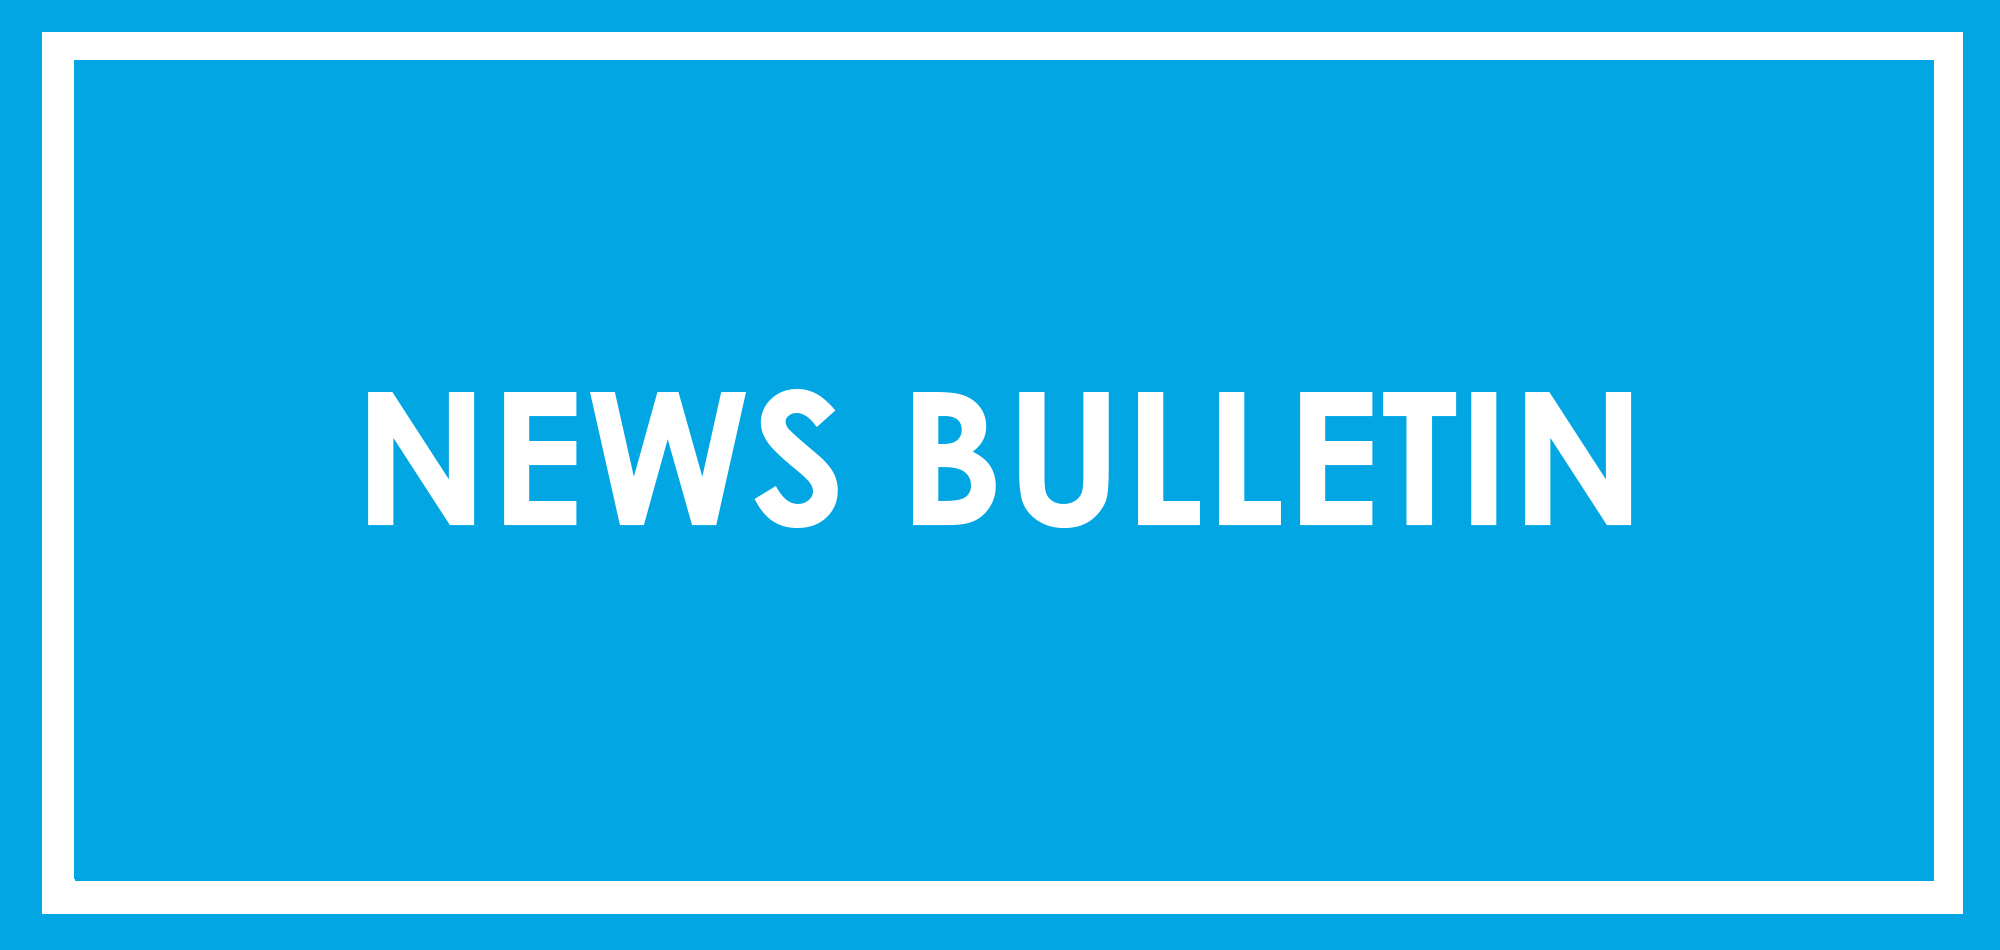 News Bulletin - 24.03.22